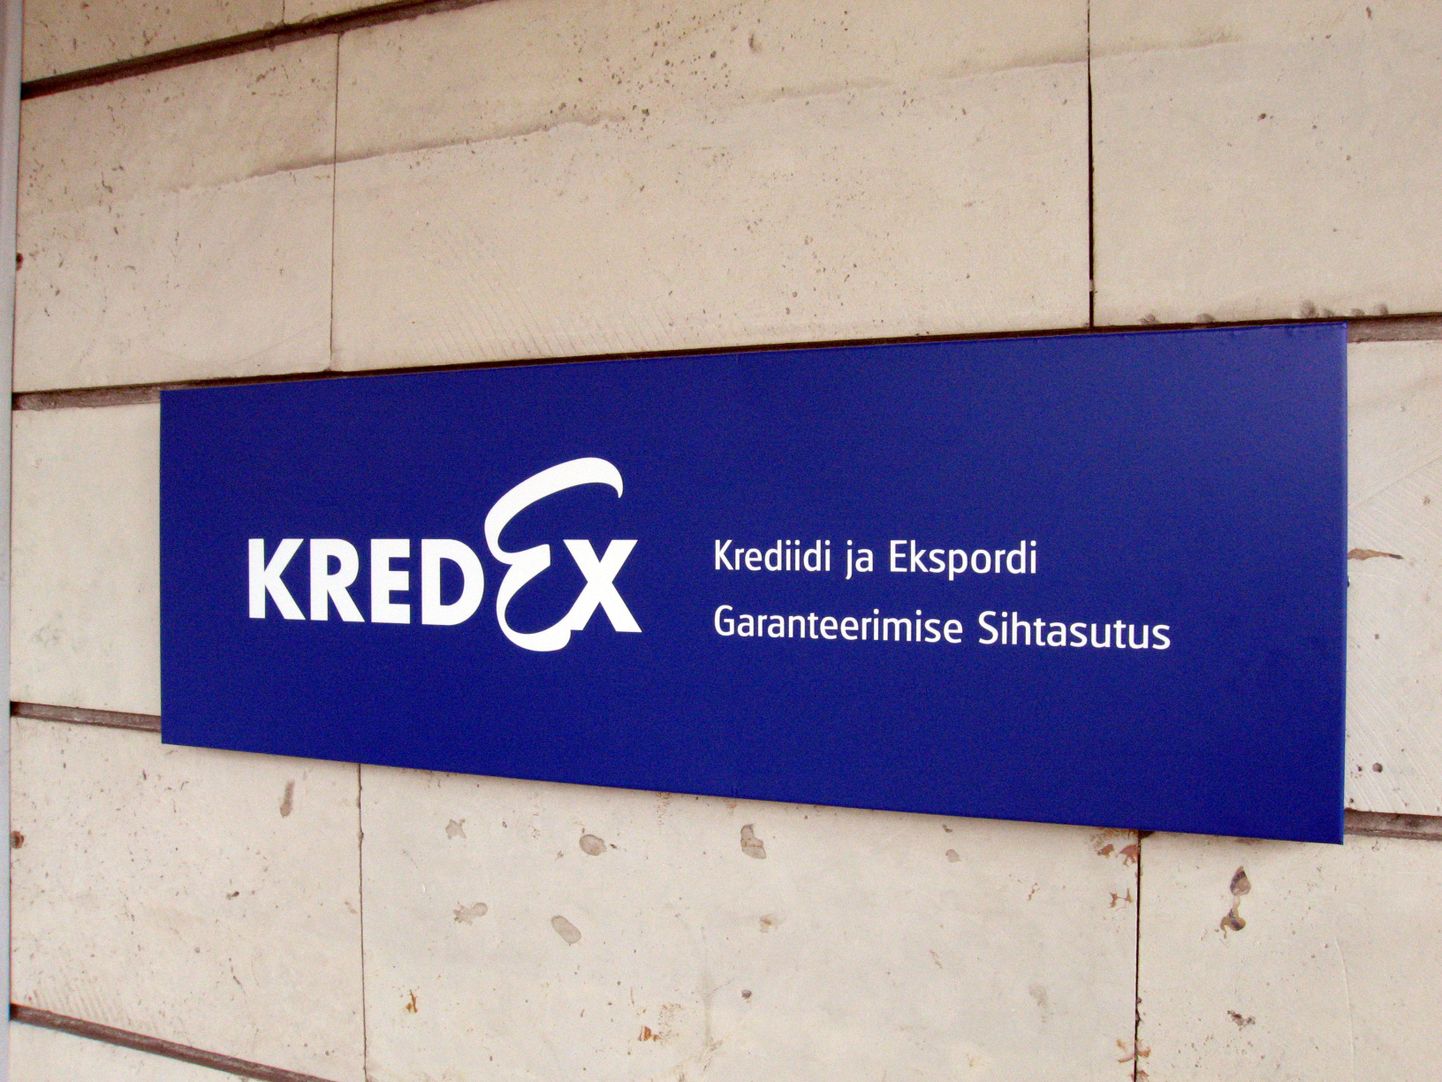 KredEx